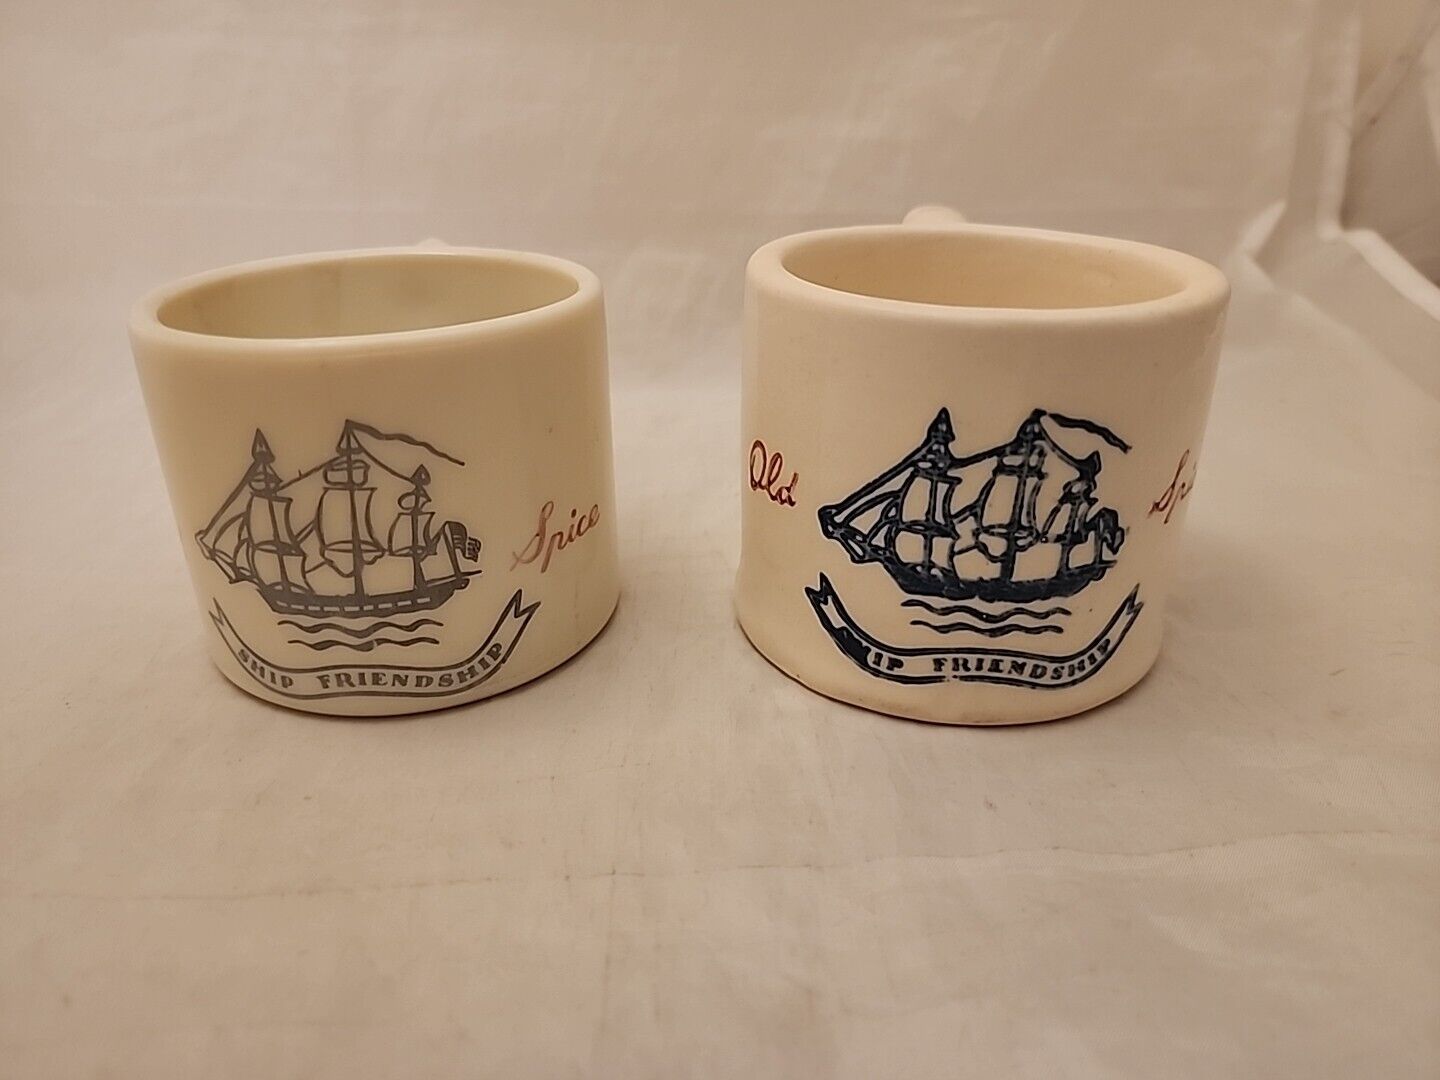 Vintage “Ship Friendship” Old Spice Shaving Mugs Ceramic Heavy Glass Lot of 2